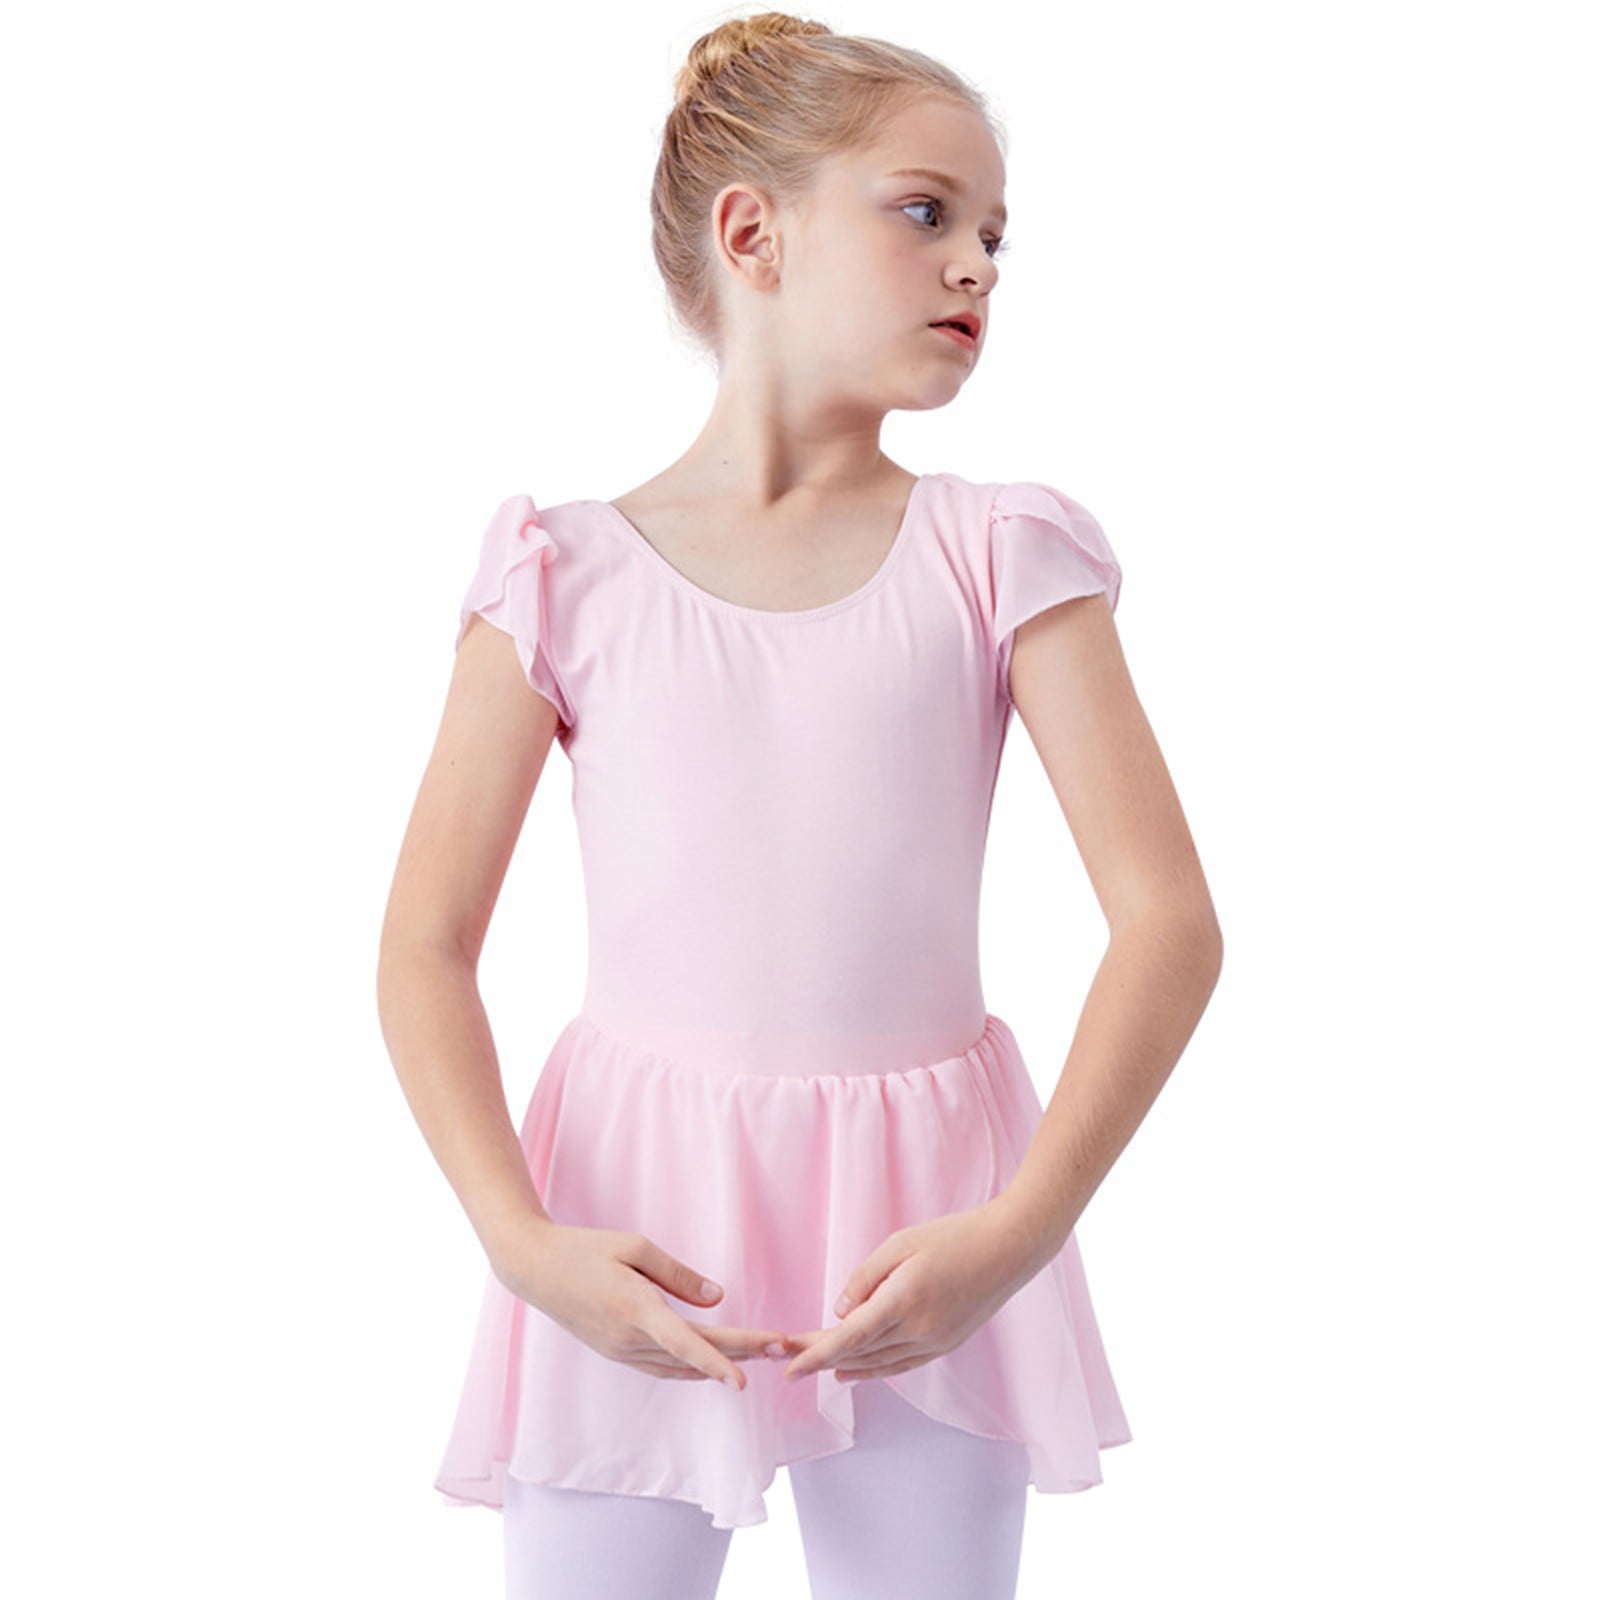 EHQJNJ Little Girls Dress up Clothes Toddler Ballet Leotard for Girls ...